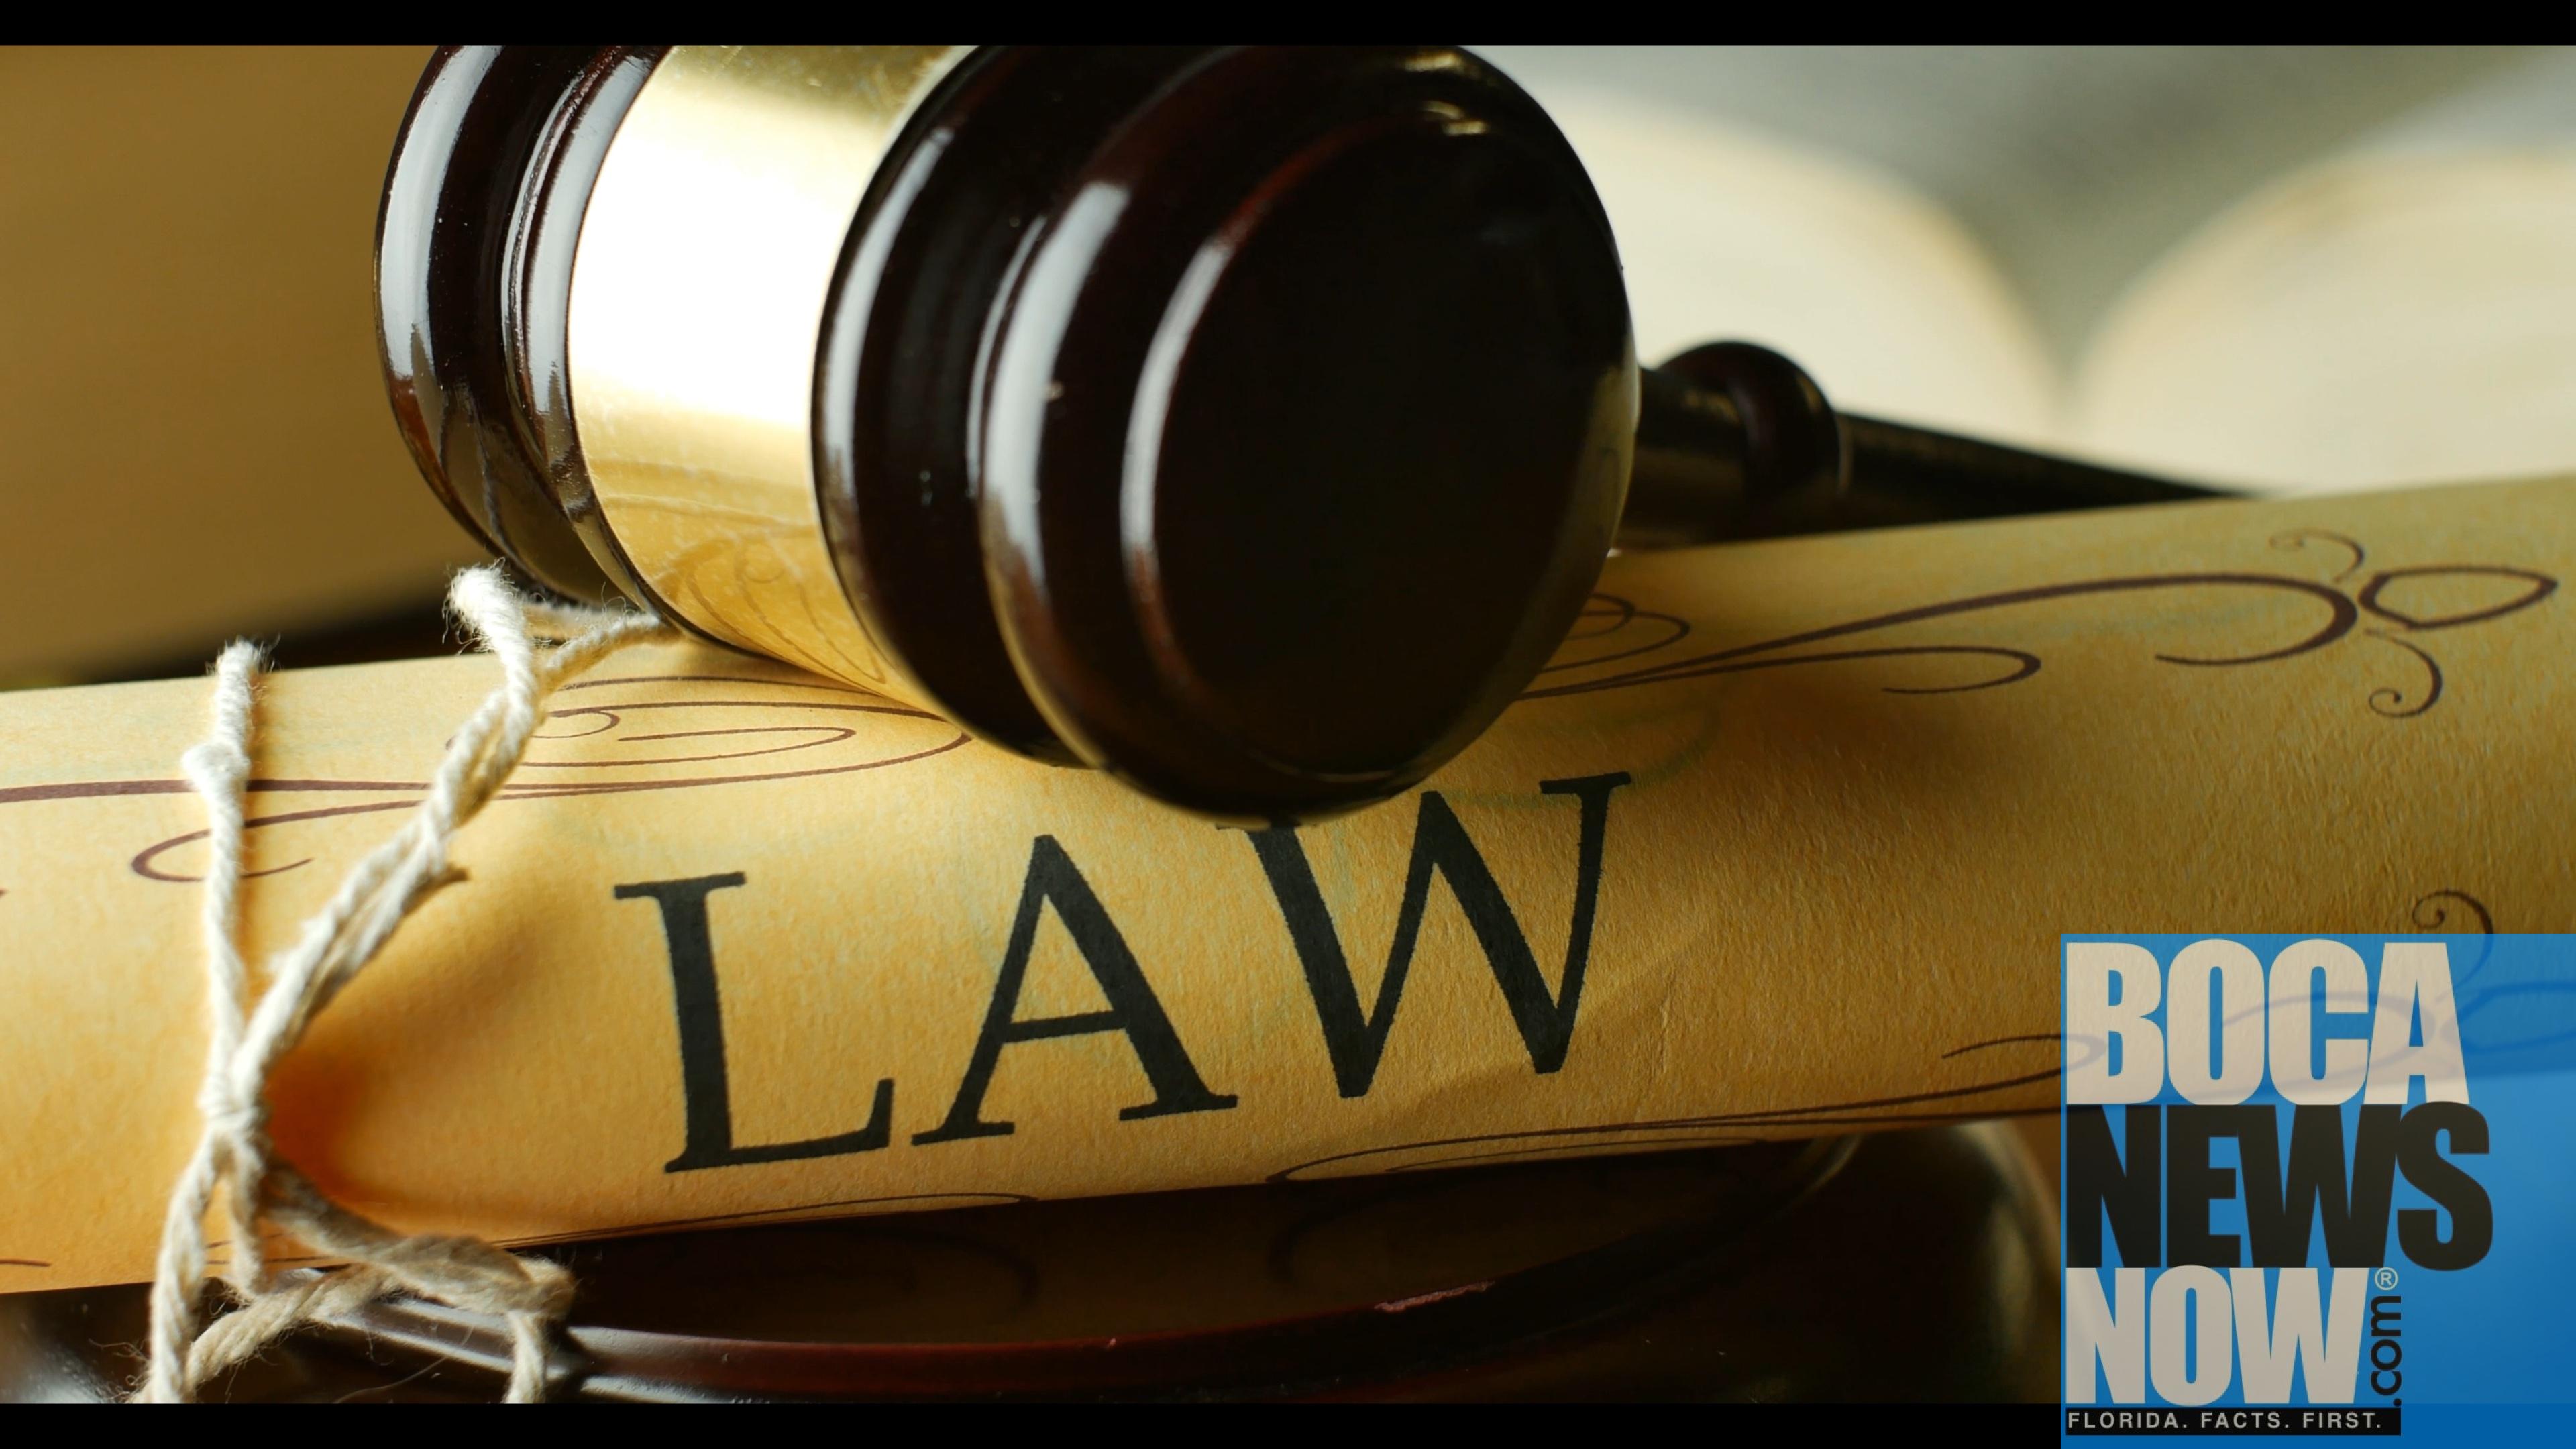 Gavel Judge Lawsuit Litigation Legal